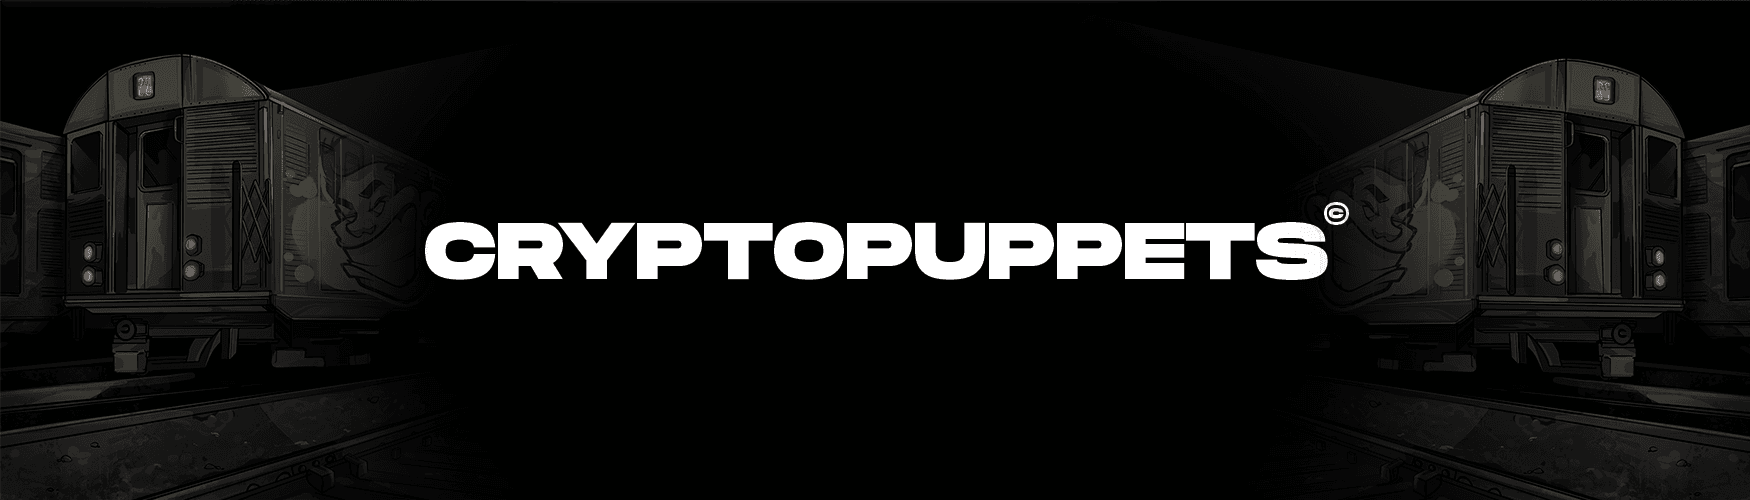 OgCryptopuppets